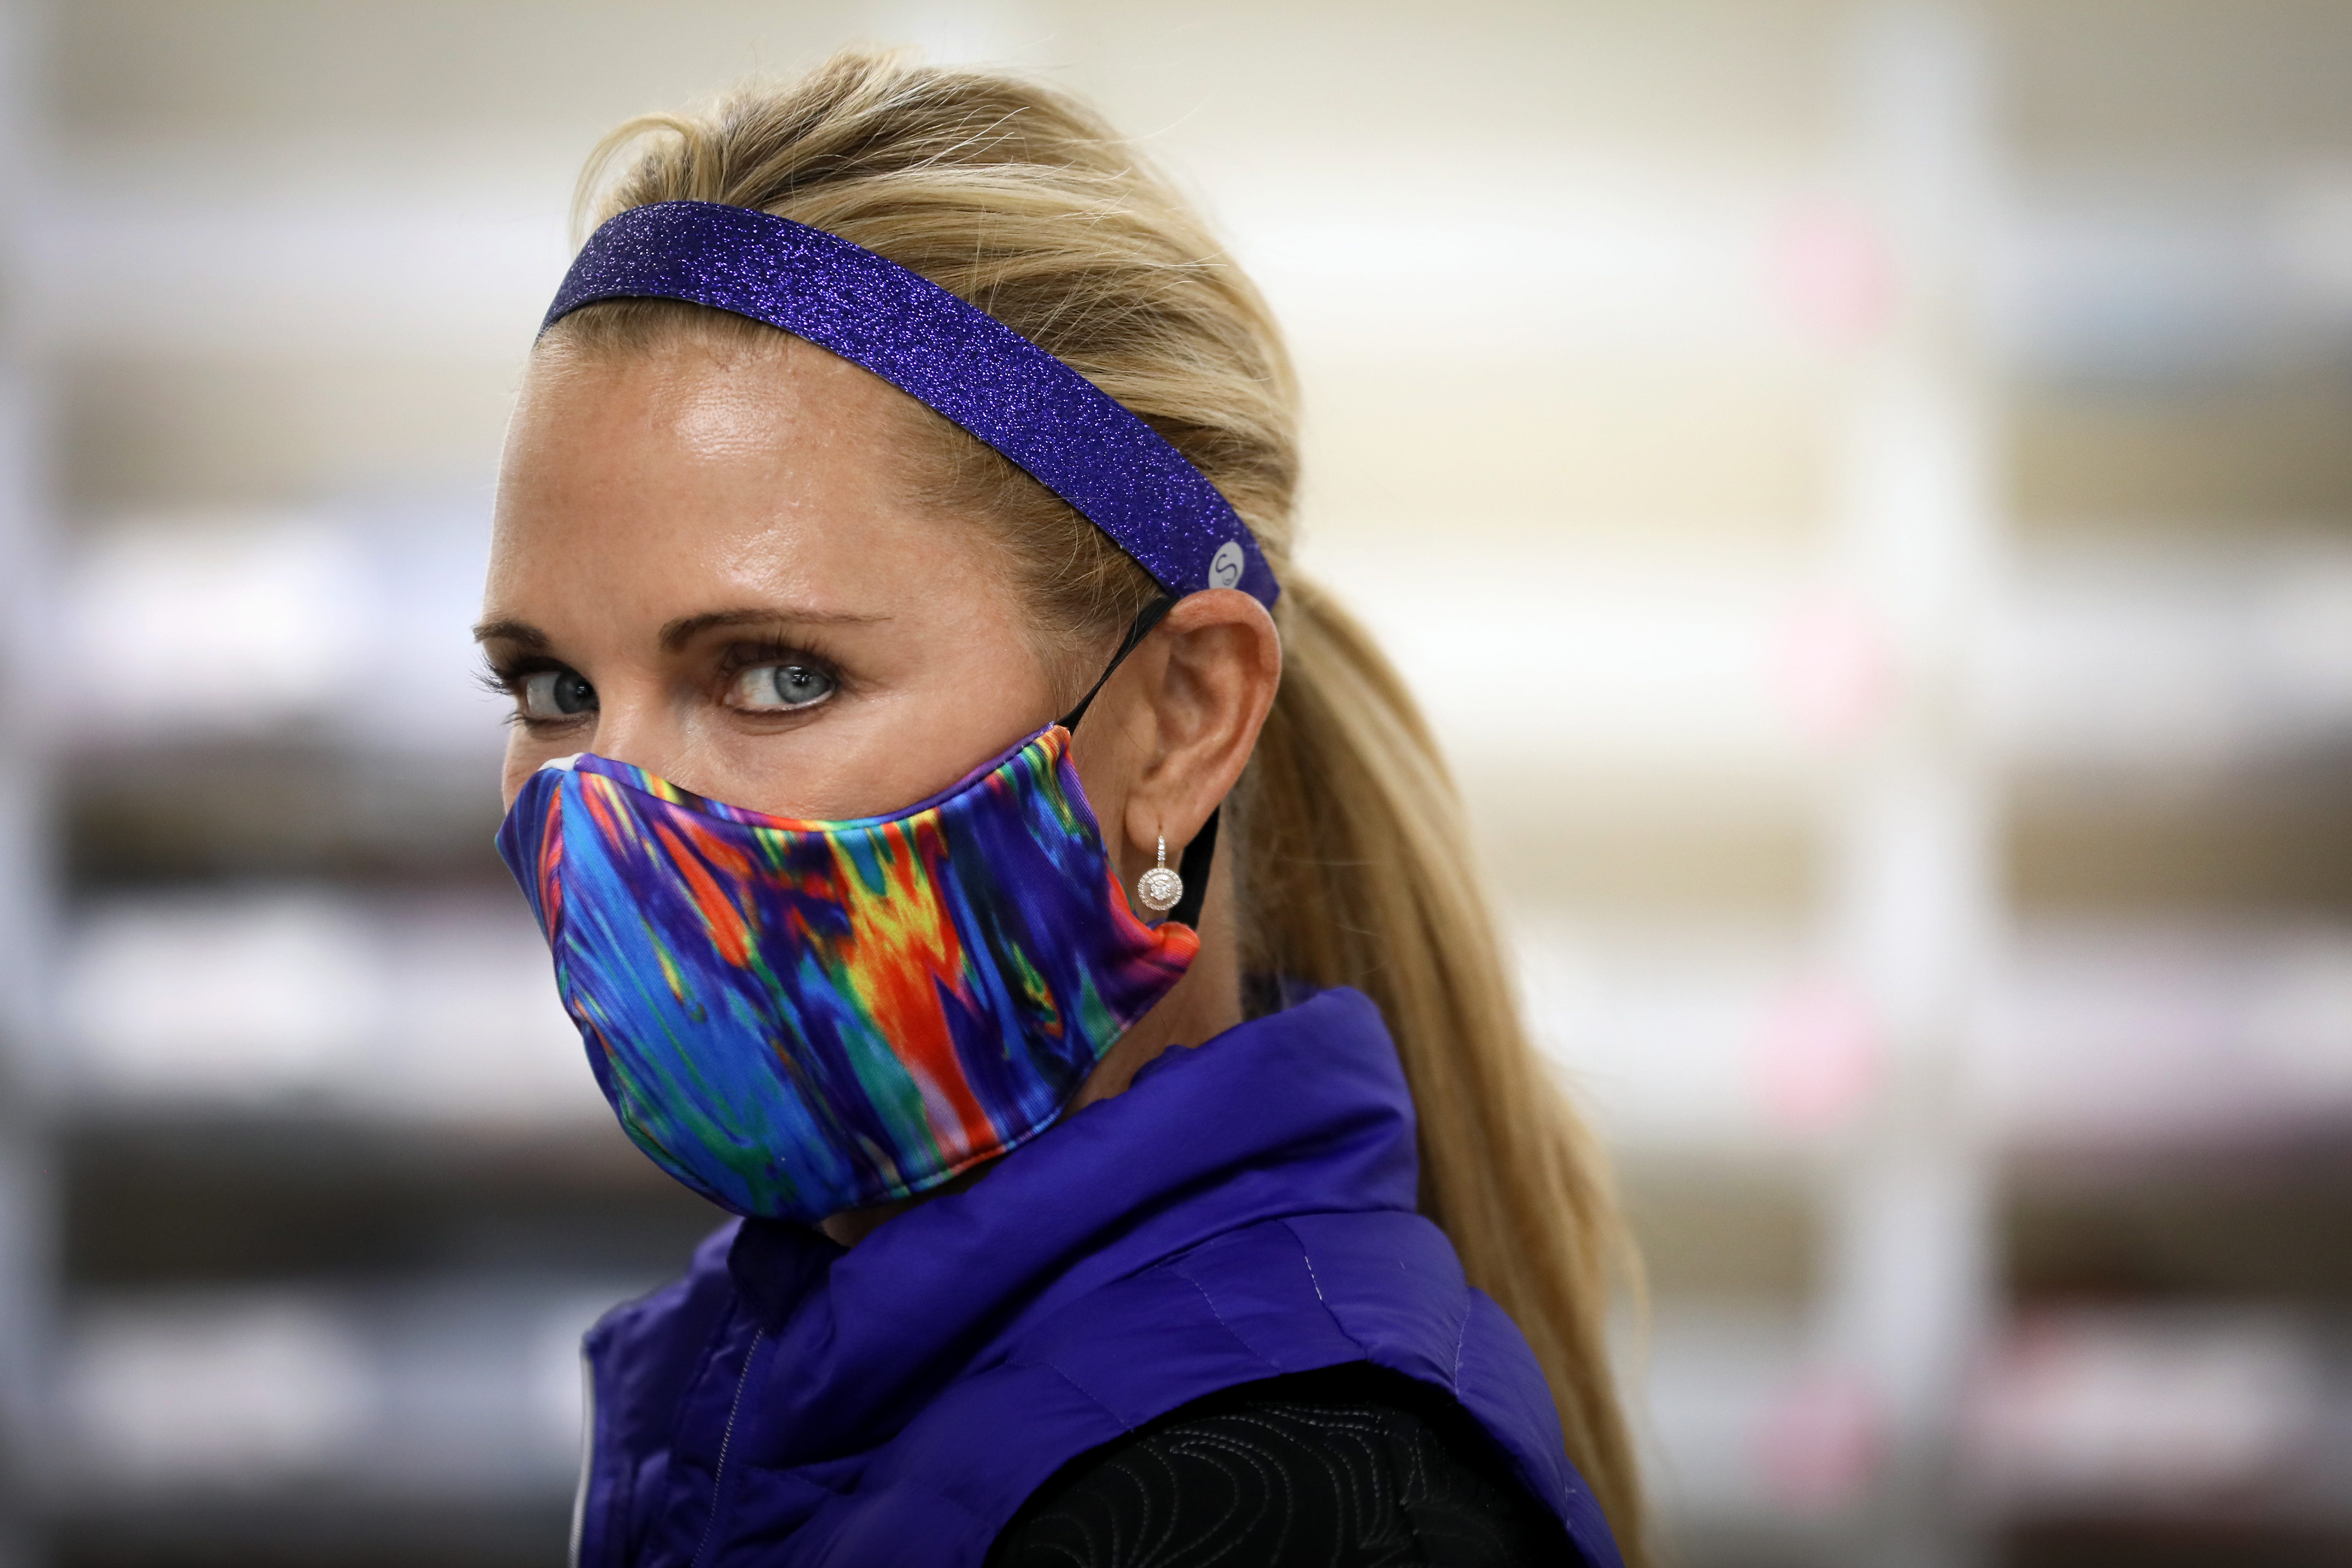 Cronavirus Prompts Sweaty Bands To Make Masks From Headband Materials